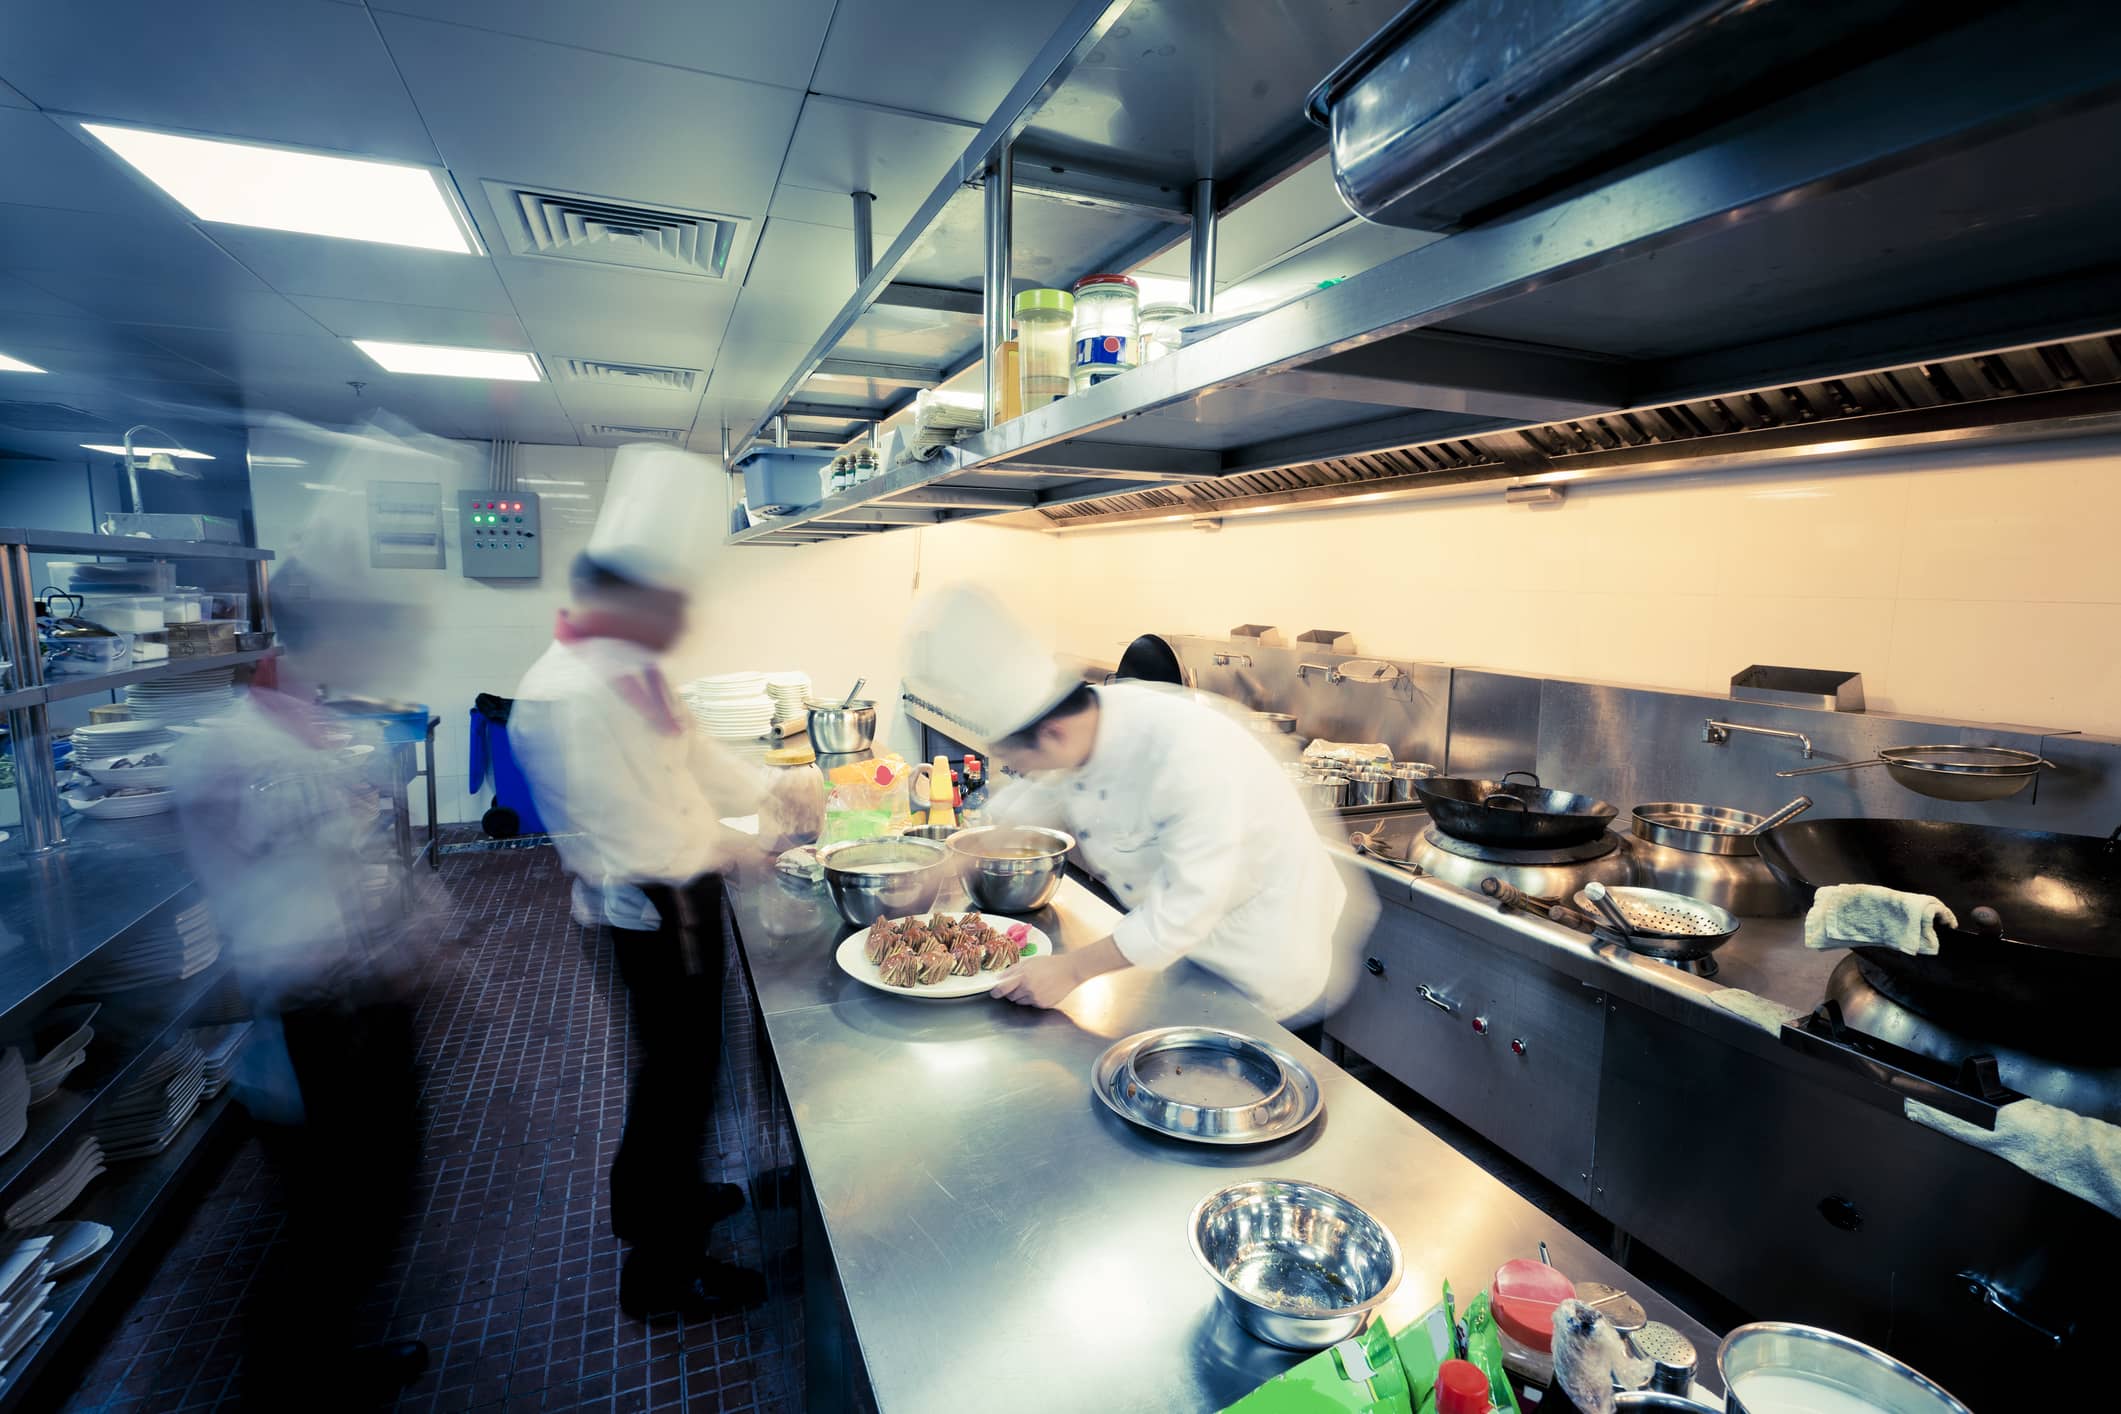 Fast-paced restaurant kitchen with chefs preparing meals.